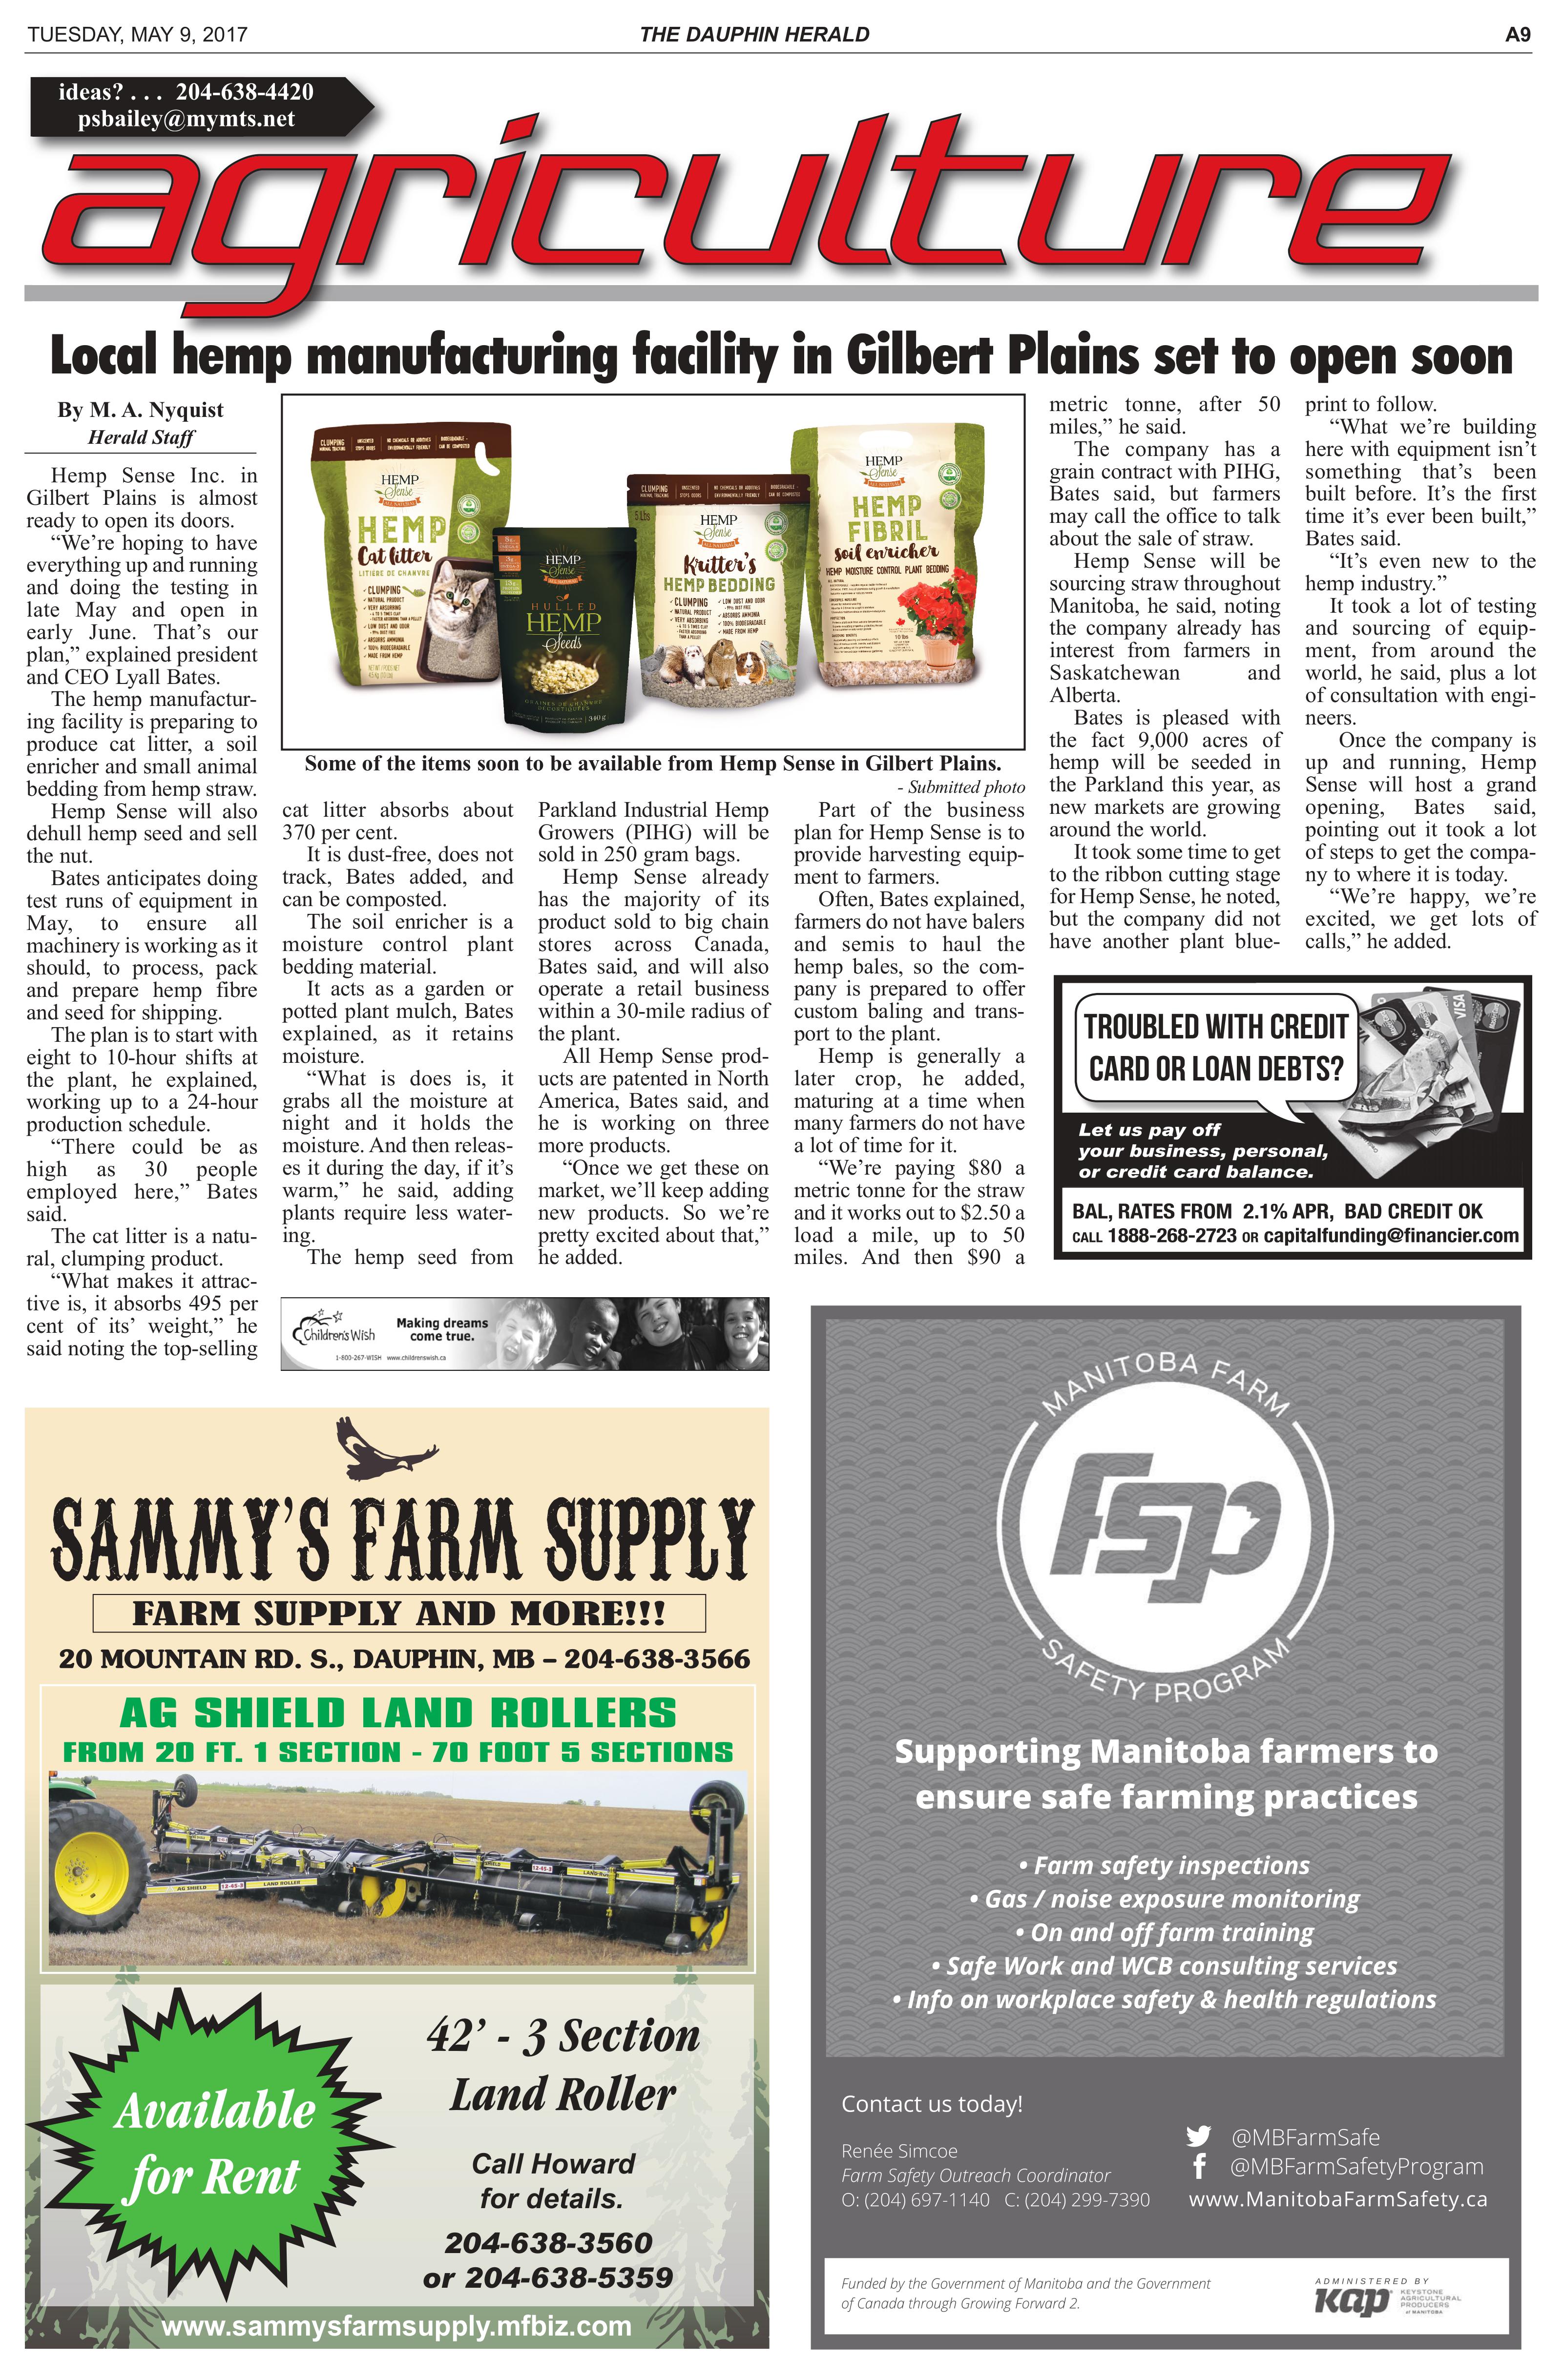 Dauphin Herald – Local hemp manufacturing facility in Gilbert Plains ...